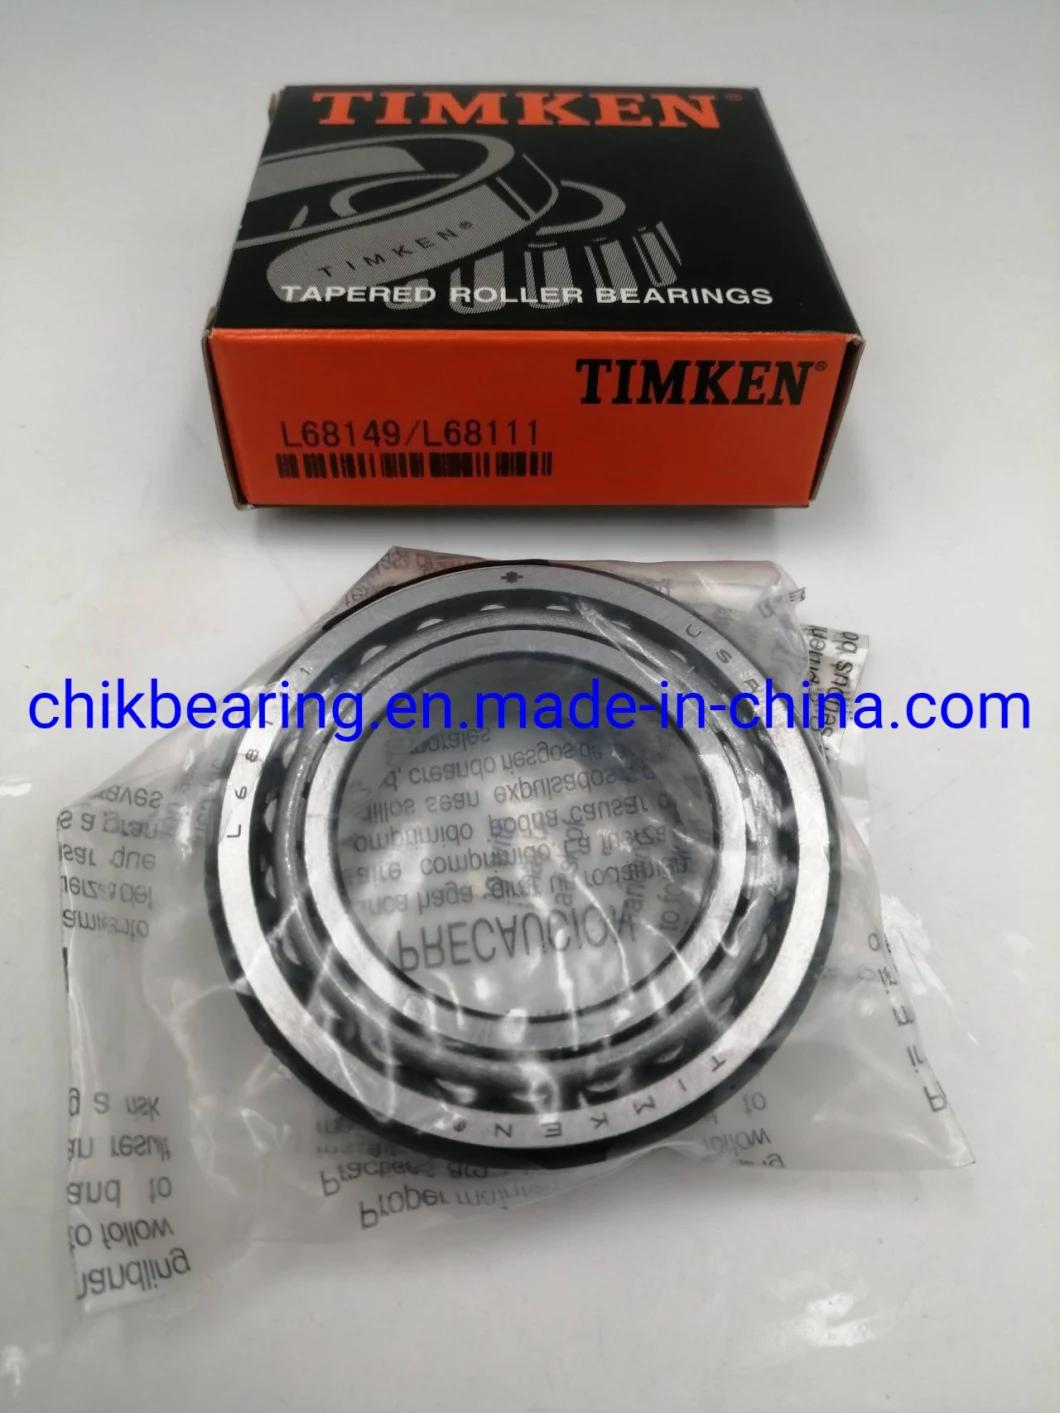 Timken SKF Koyo NSK NTN NACHI Wheel Bearing Transmission Bearing Gearbox Bearing Lm29749/Lm29711 Lm607045/Lm607010 Taper Roller Bearing Lm29749/11 Lm607045/10